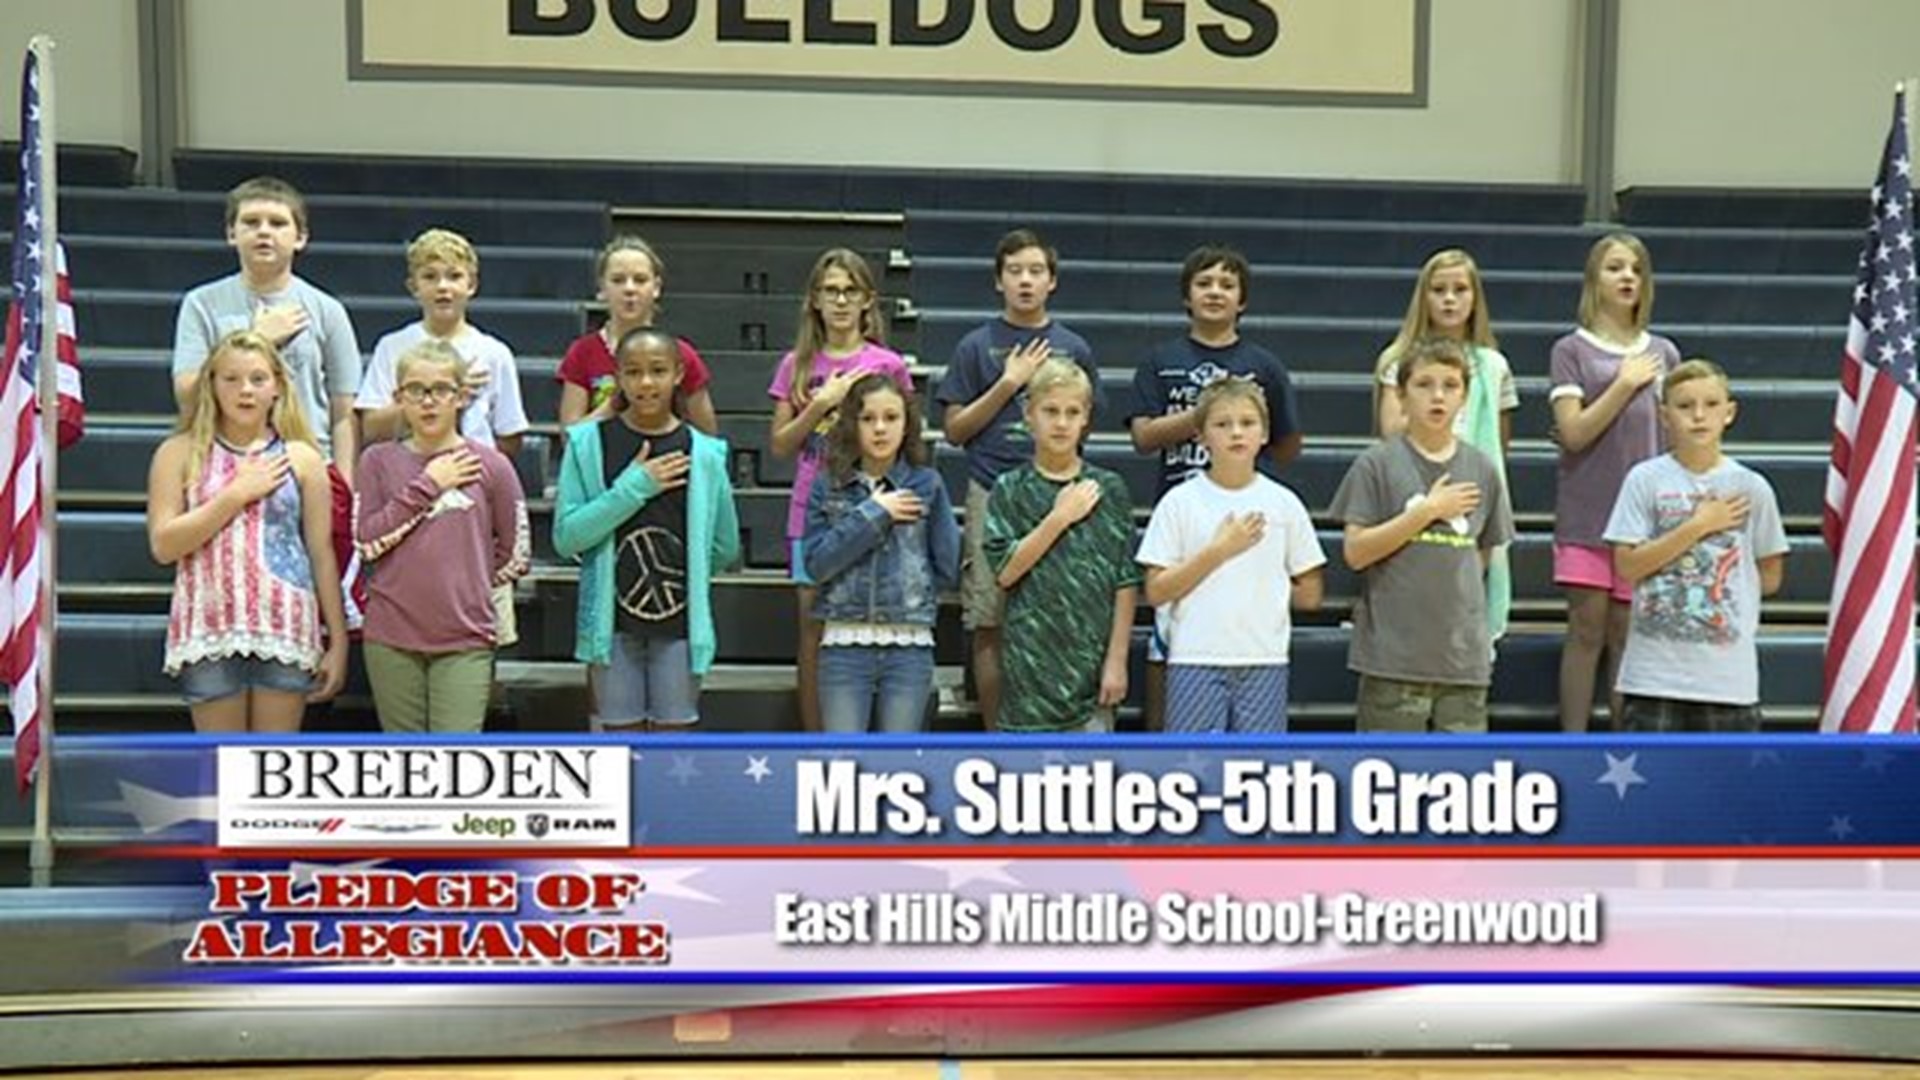 East Hills Middle School, Greenwood - Mrs. Suttles, 5th Grade